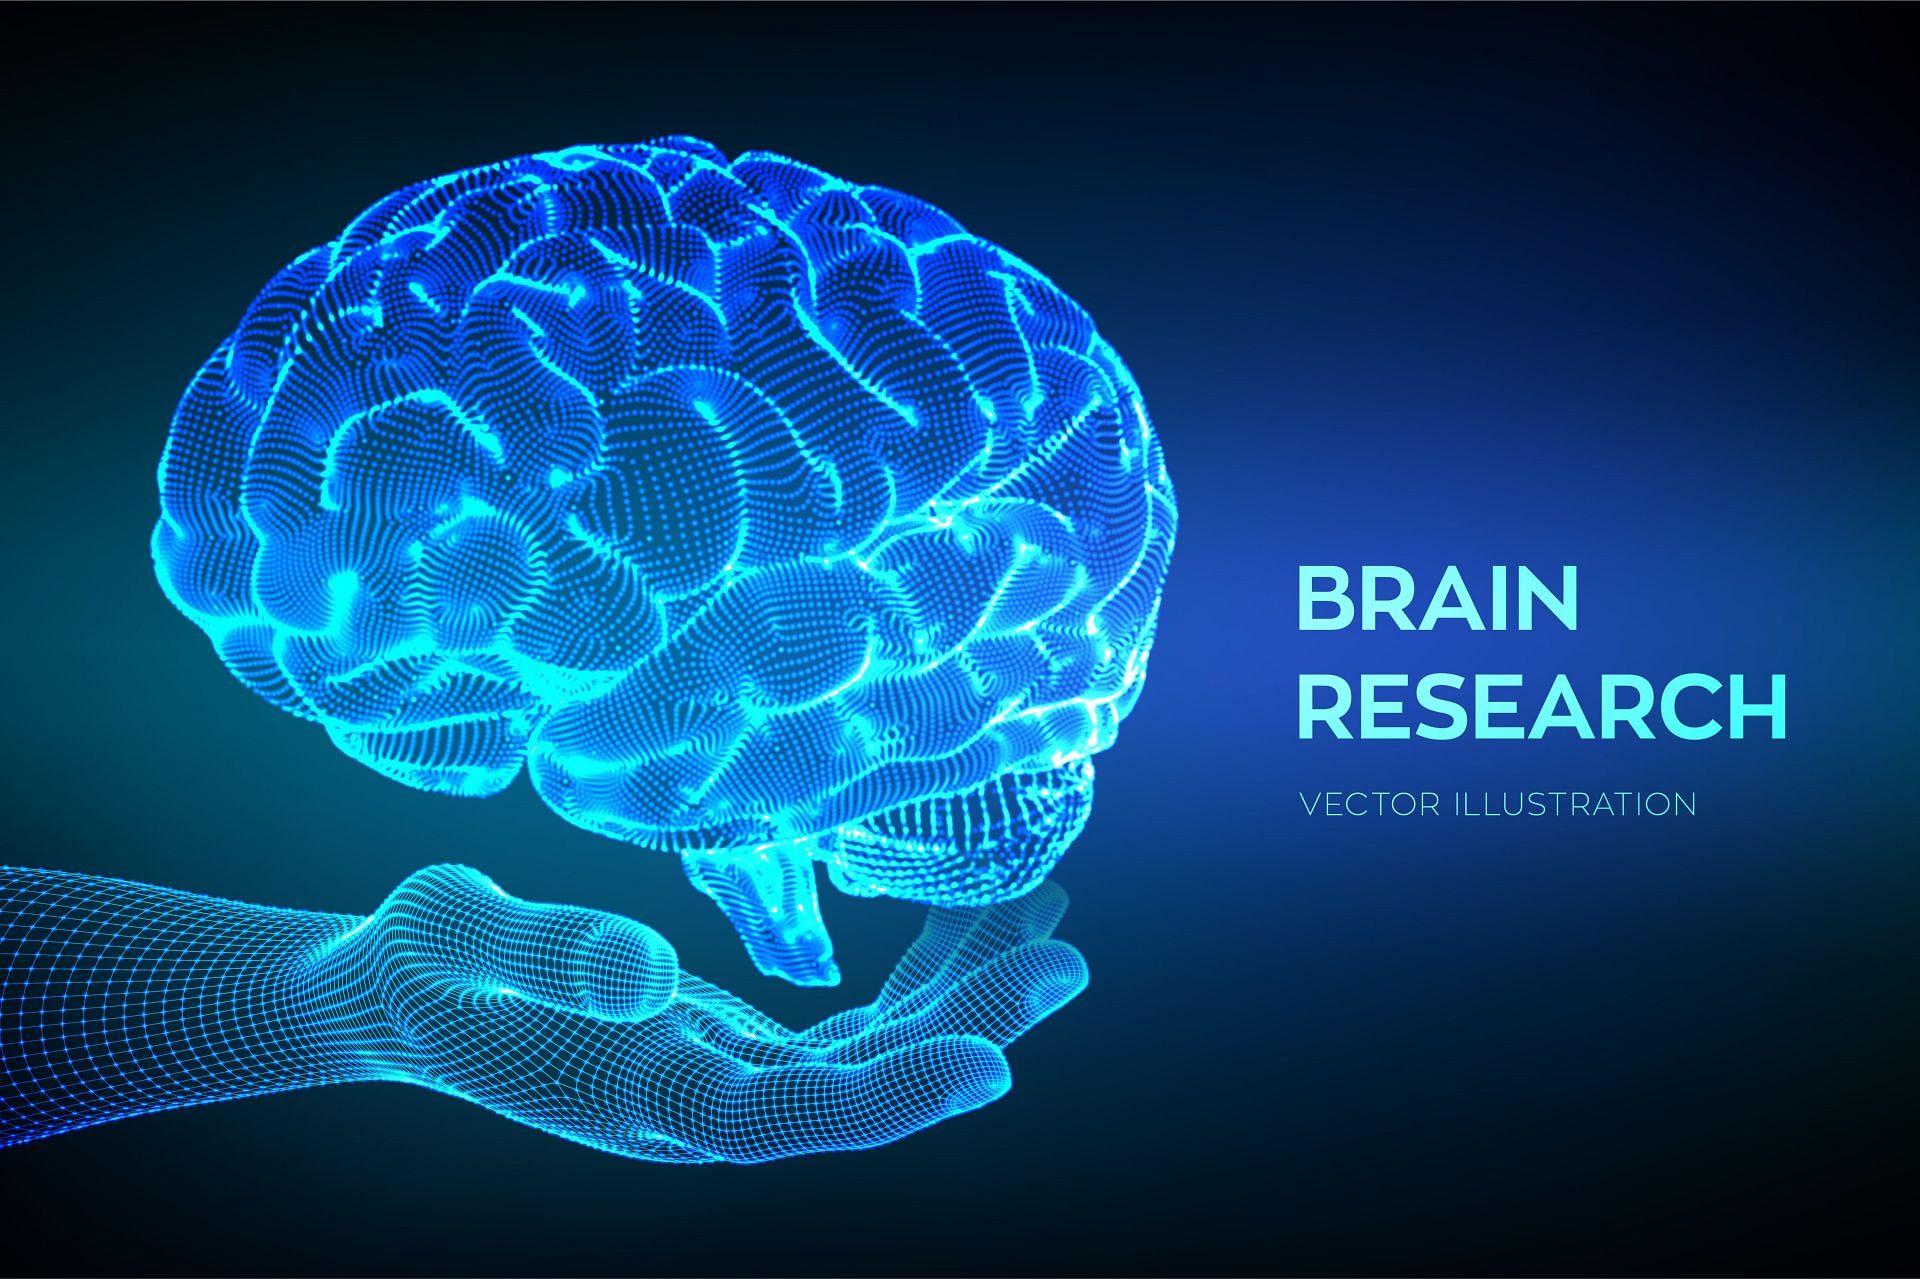 Are you ready to rewire your brain for success? (Image via Freepik/Rawpixel.com)